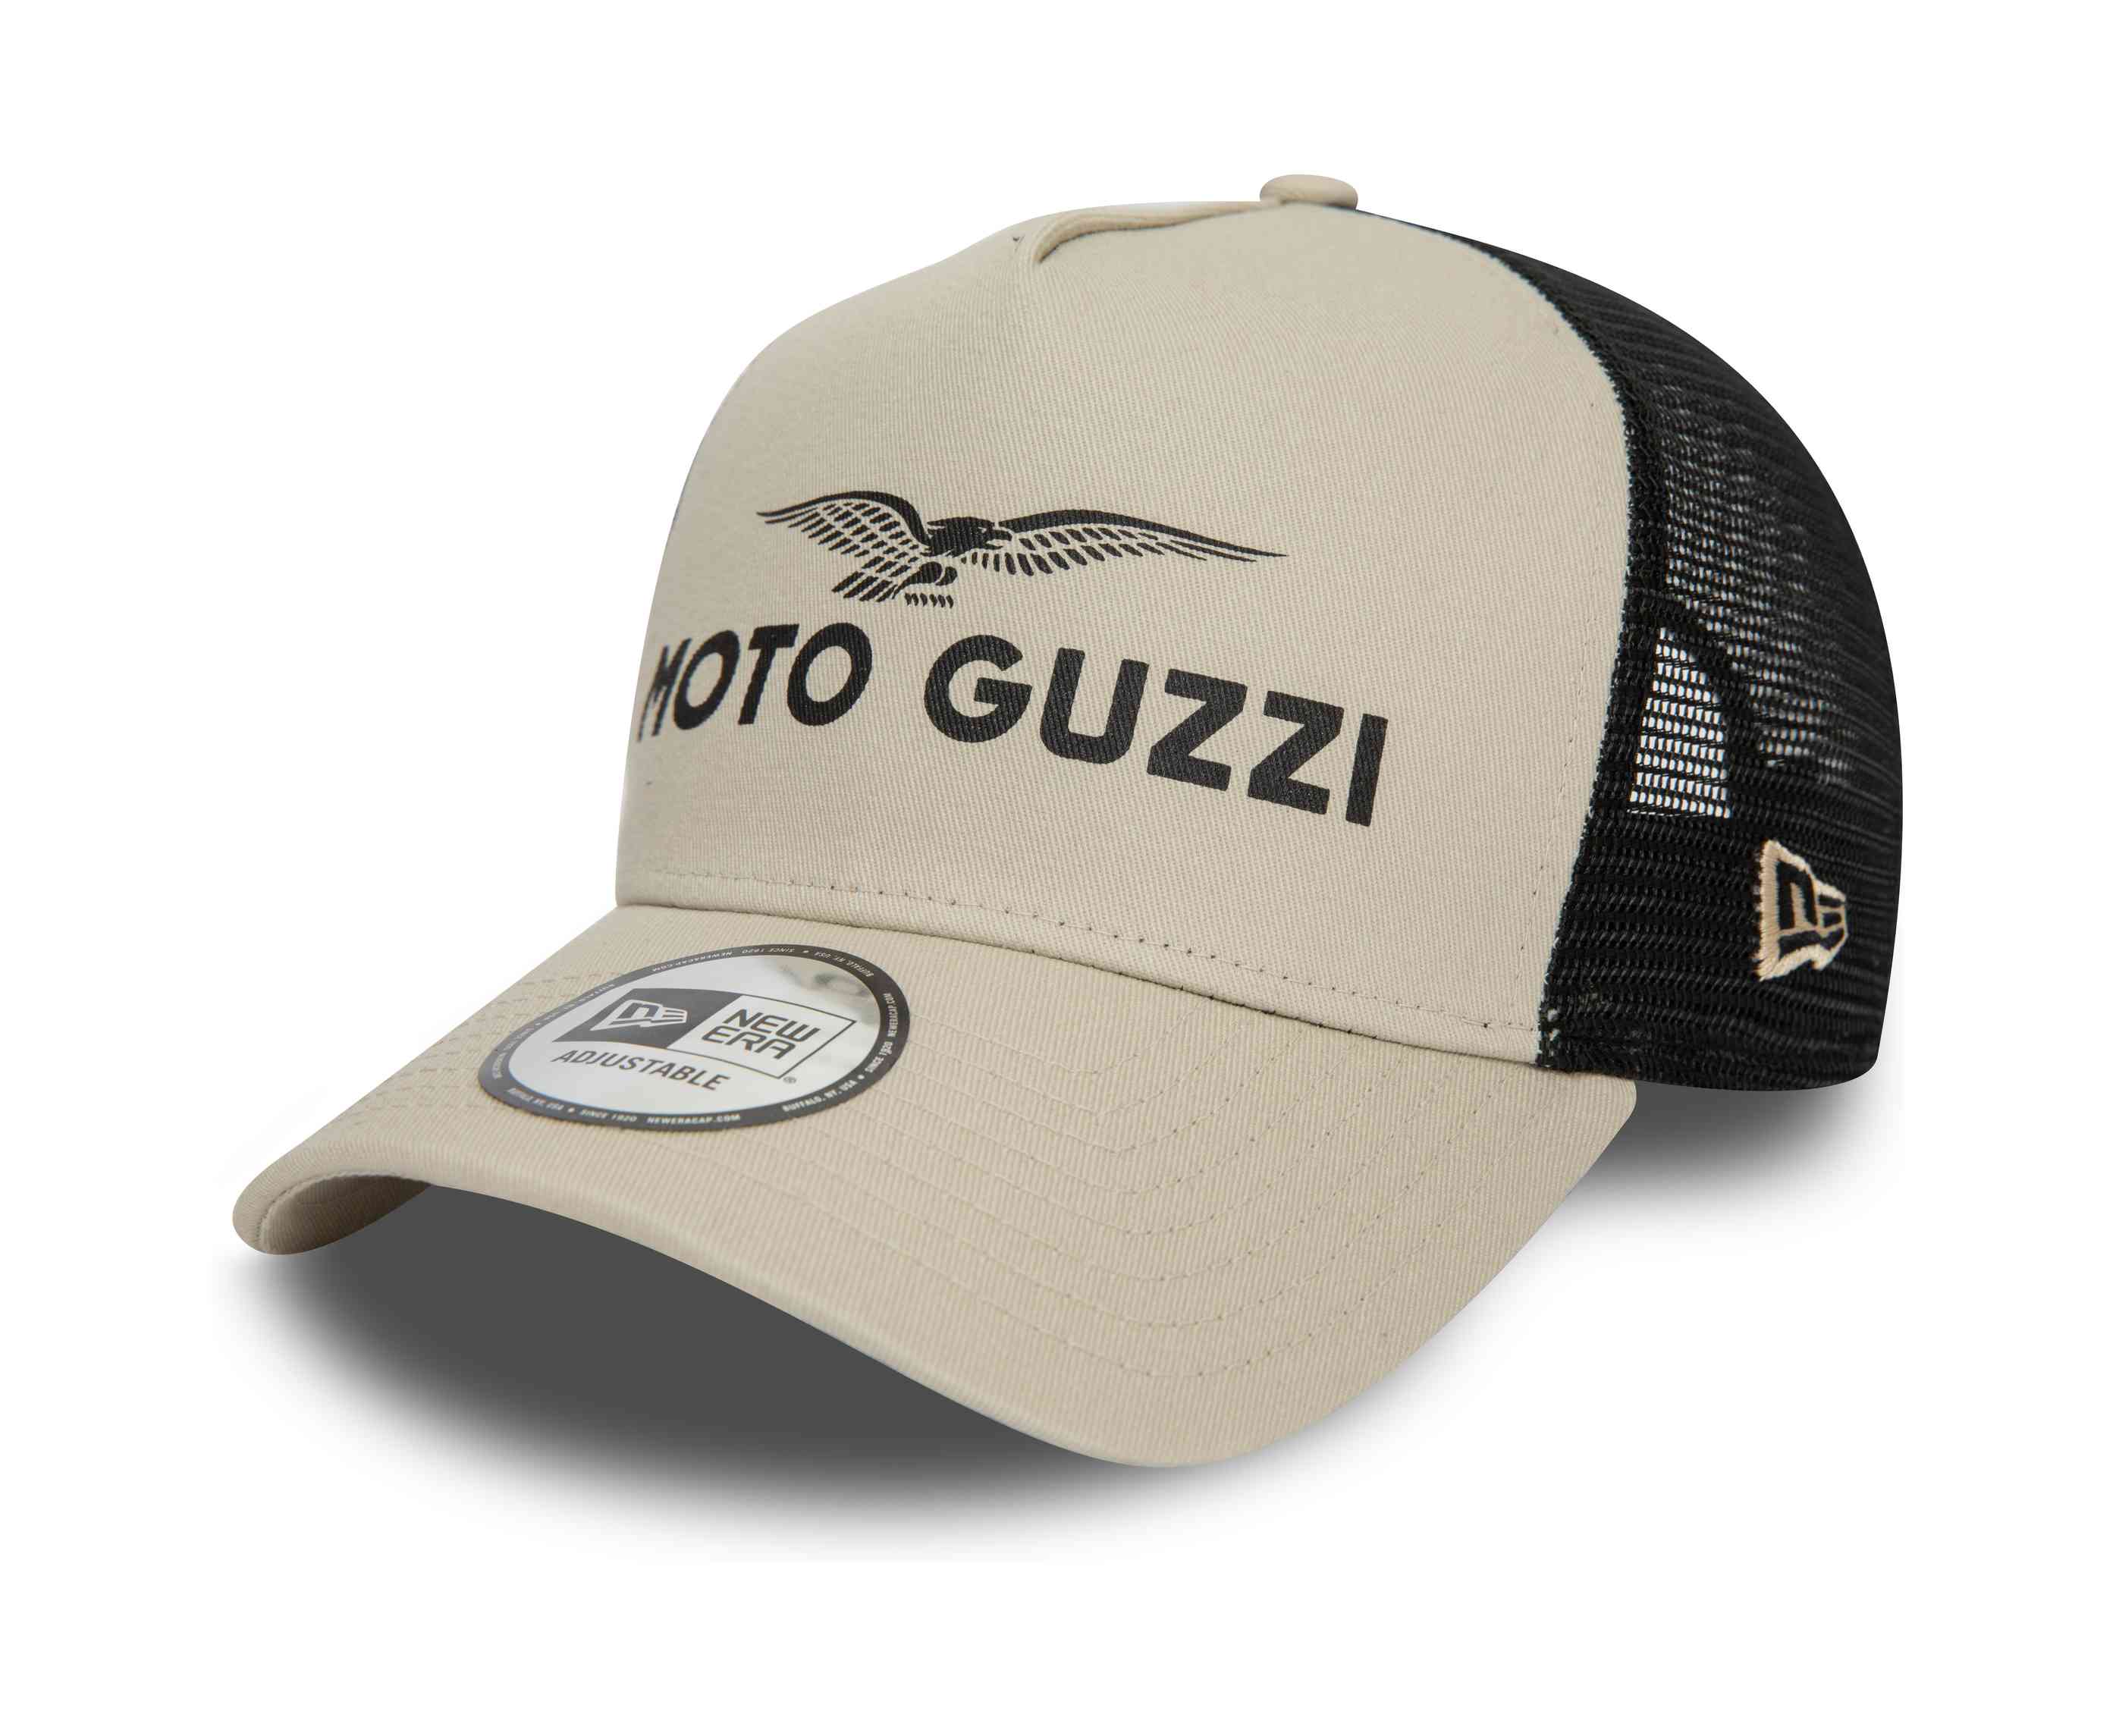 New Era - Moto Guzzi Seasonal Trucker Snapback Cap